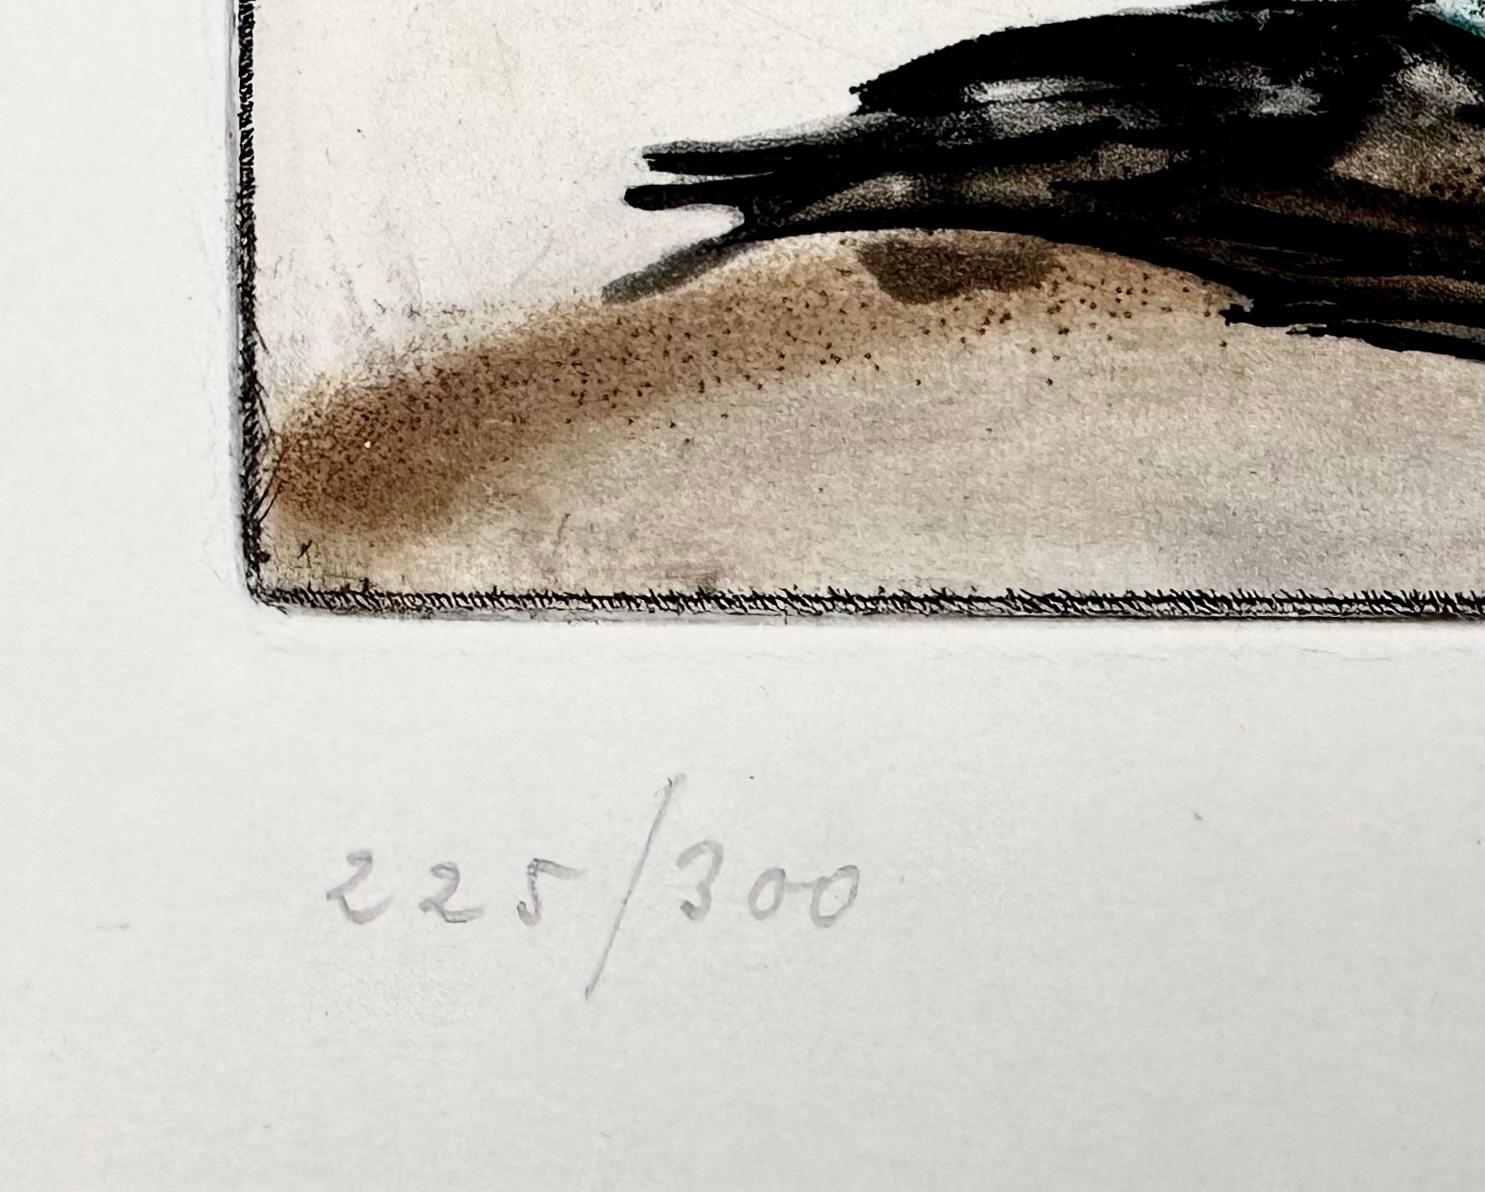 Pablo Picasso – Tete de Faune
Color soft ground Etching & Aquatint on wove paper, 1958
Hand signed and numbered (225/ 300) in pencil
Published by Crommelynck, Paris
Image size: 30.3 x 25.5 cm
Frame size: 71.0 x 66.0 cm
Catalogue Raisonné: M. 2101
A